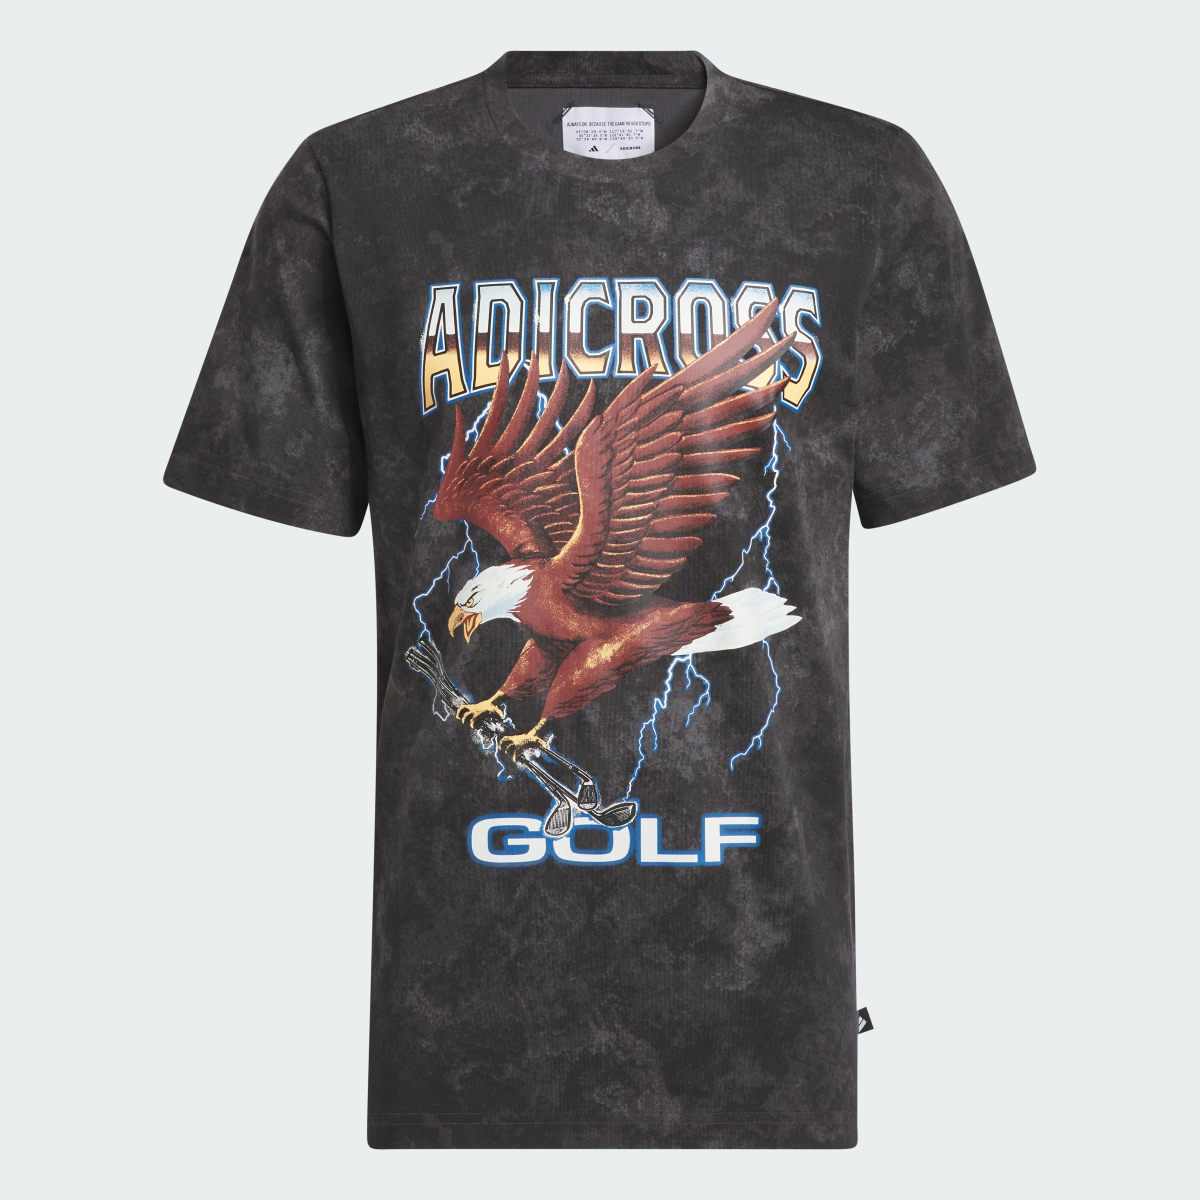 Adidas Adicross Eagle Graphic Tee. 5